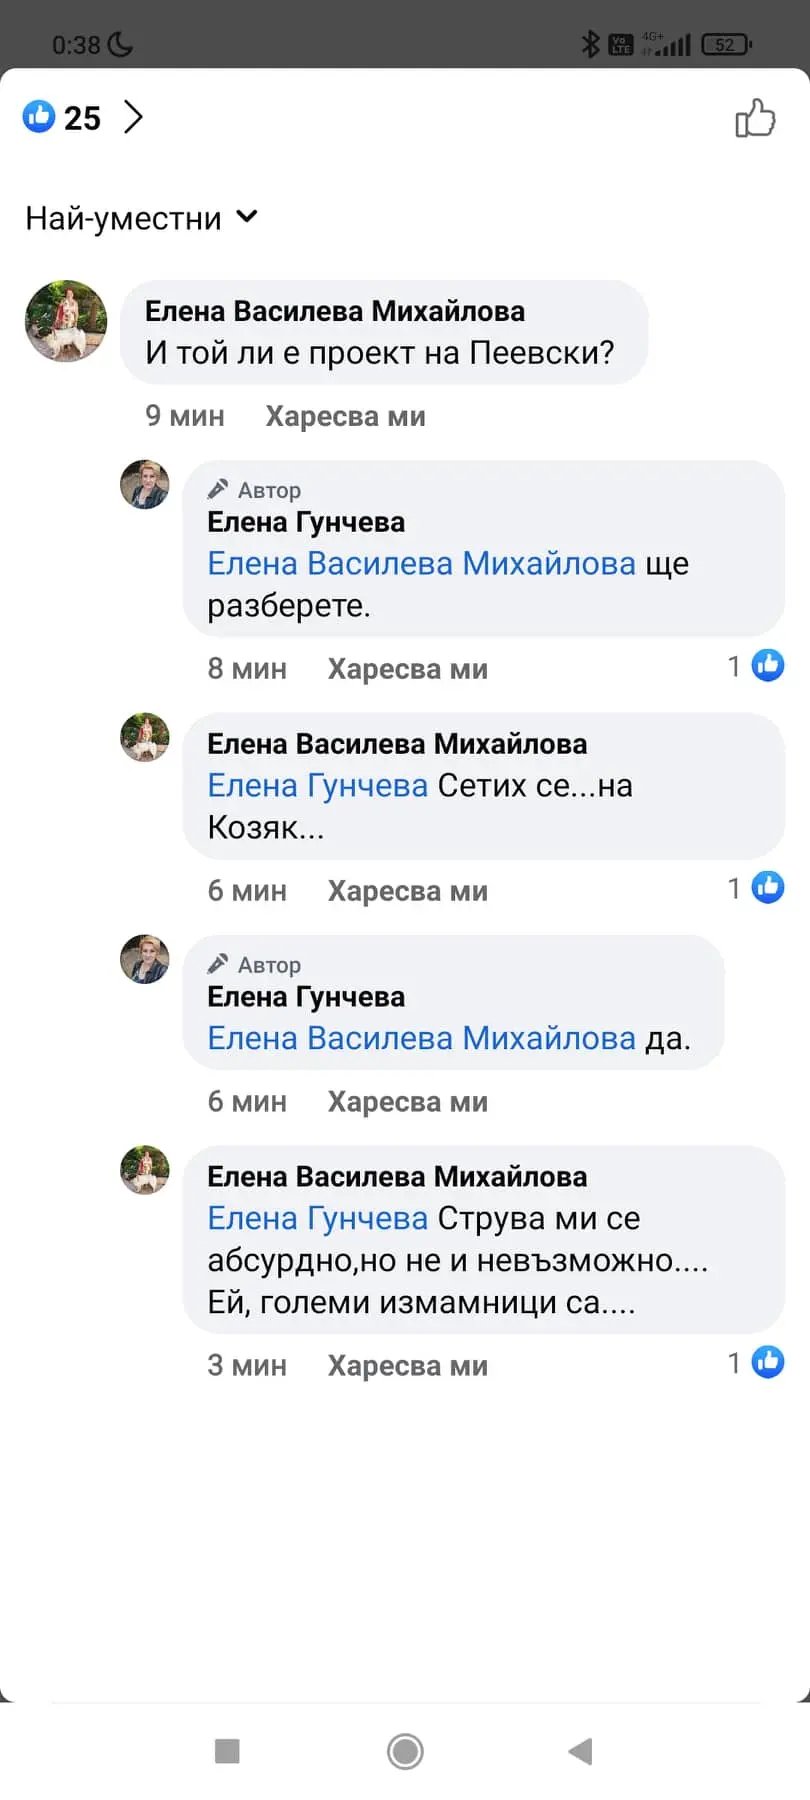 Гунчева/Фейсбук